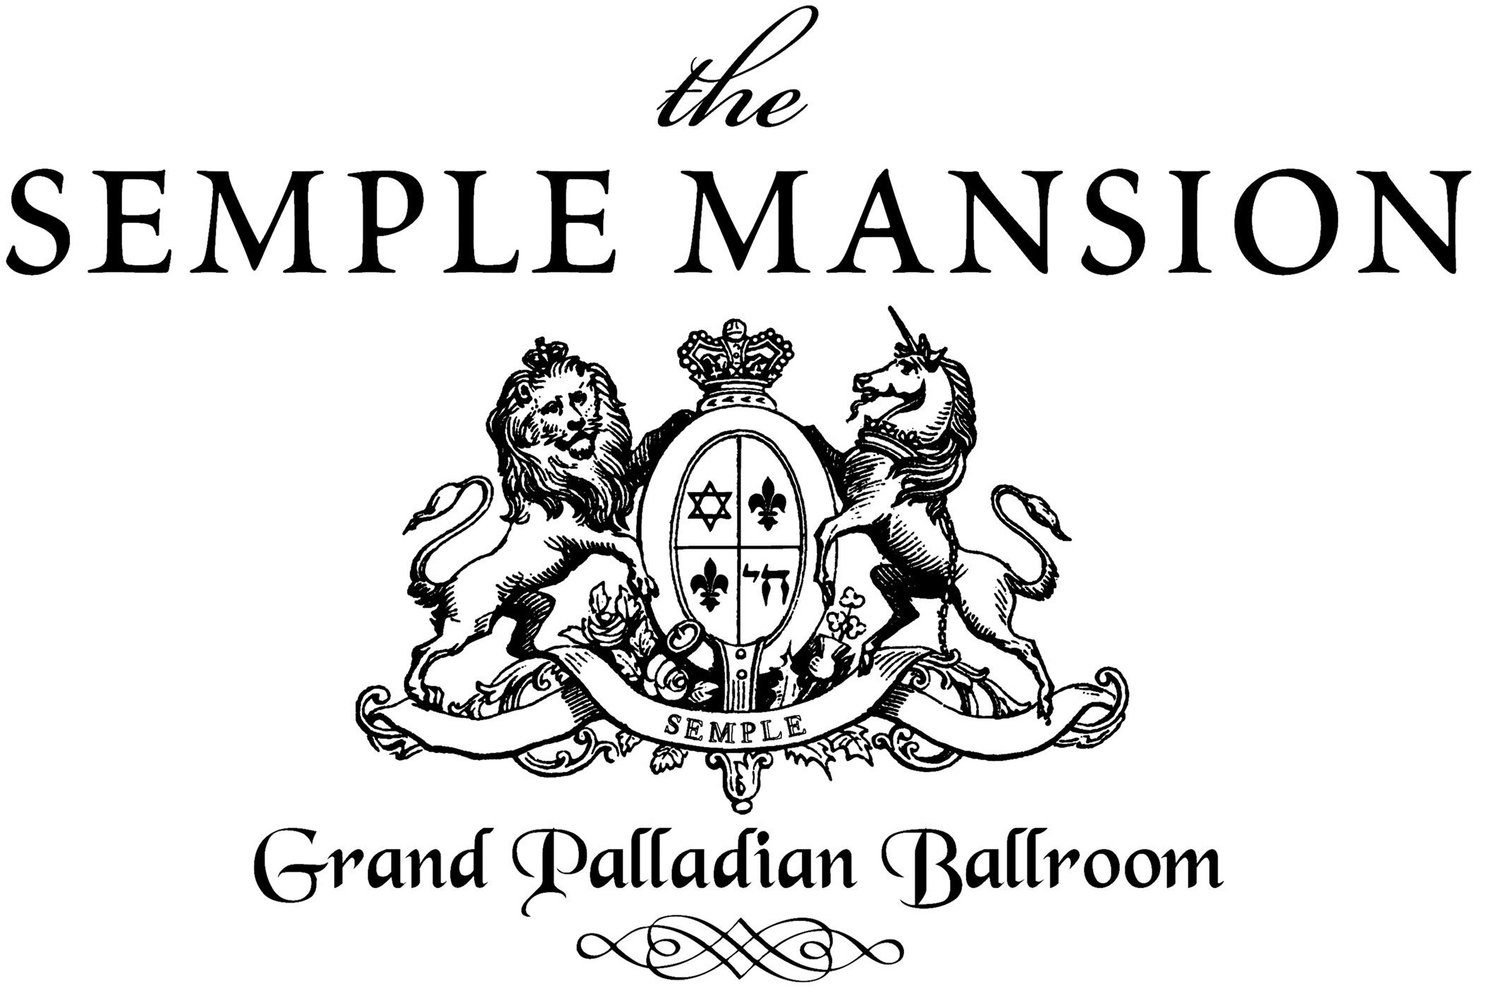 Semple Mansion